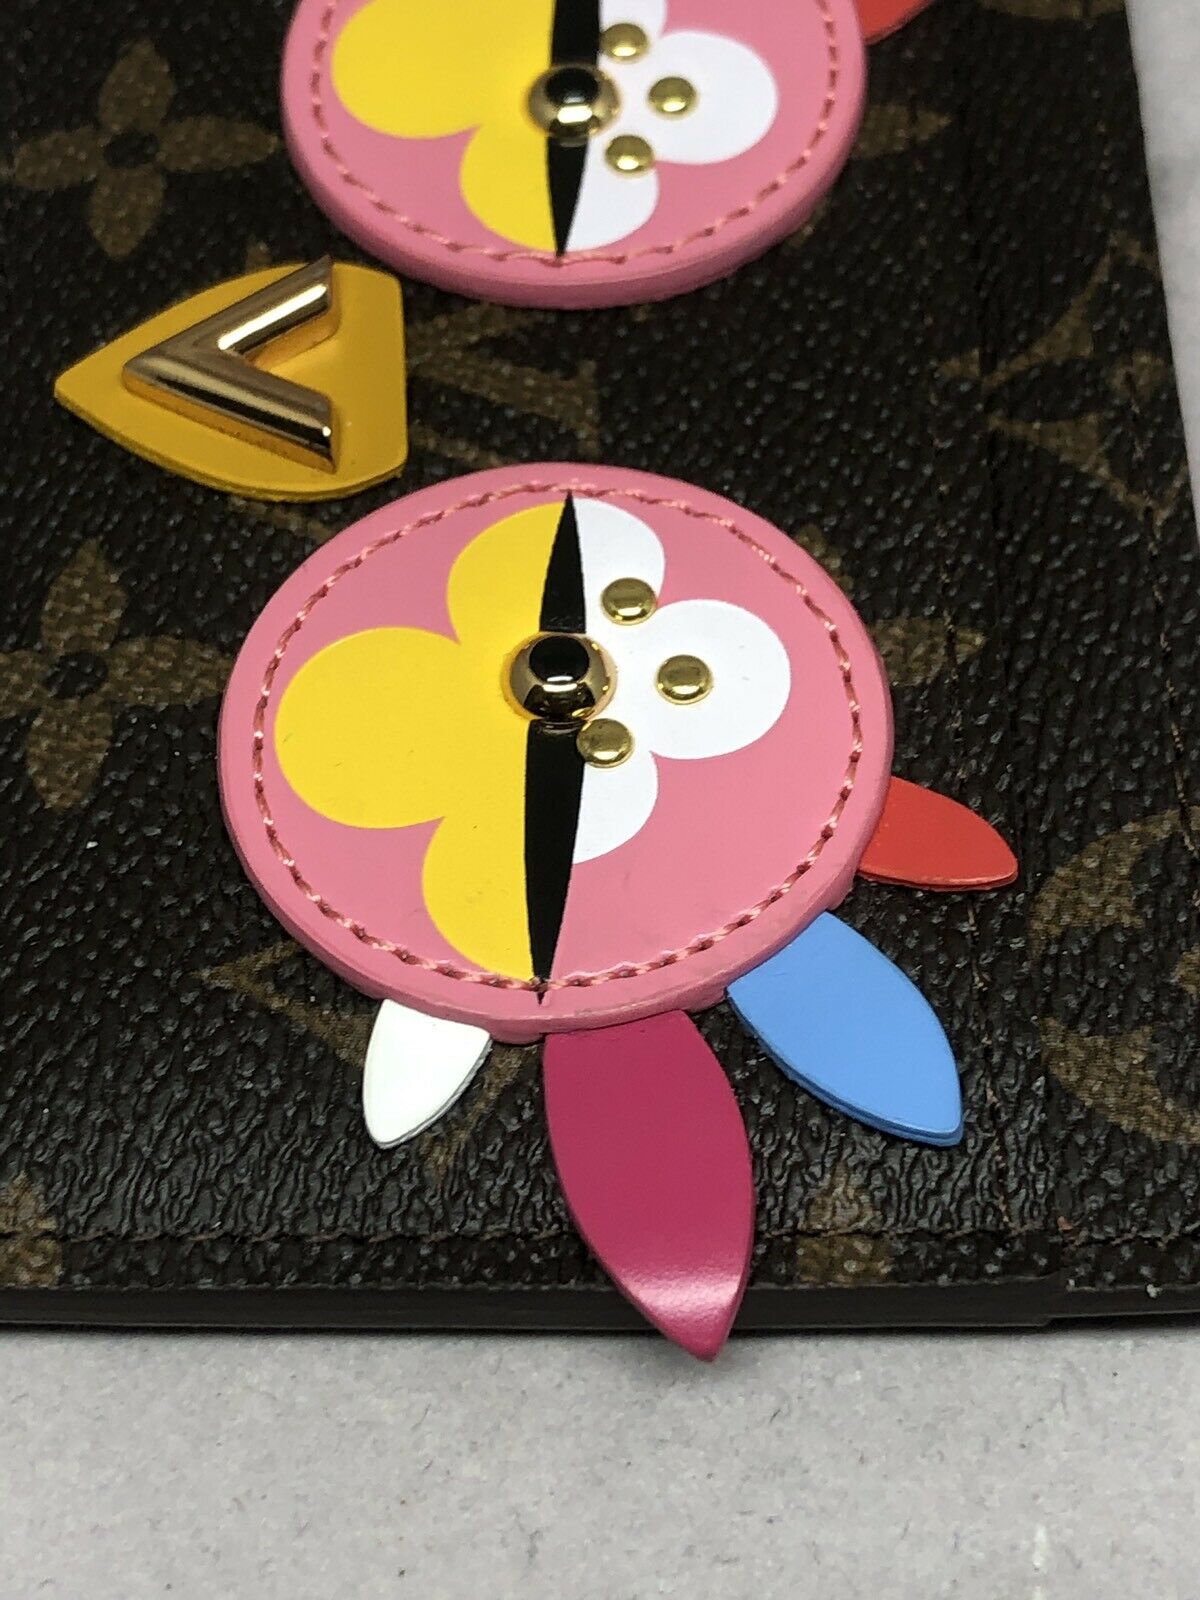 LV Louis Vuitton Love bird / owl coin purse / pouch / keychain / key holder